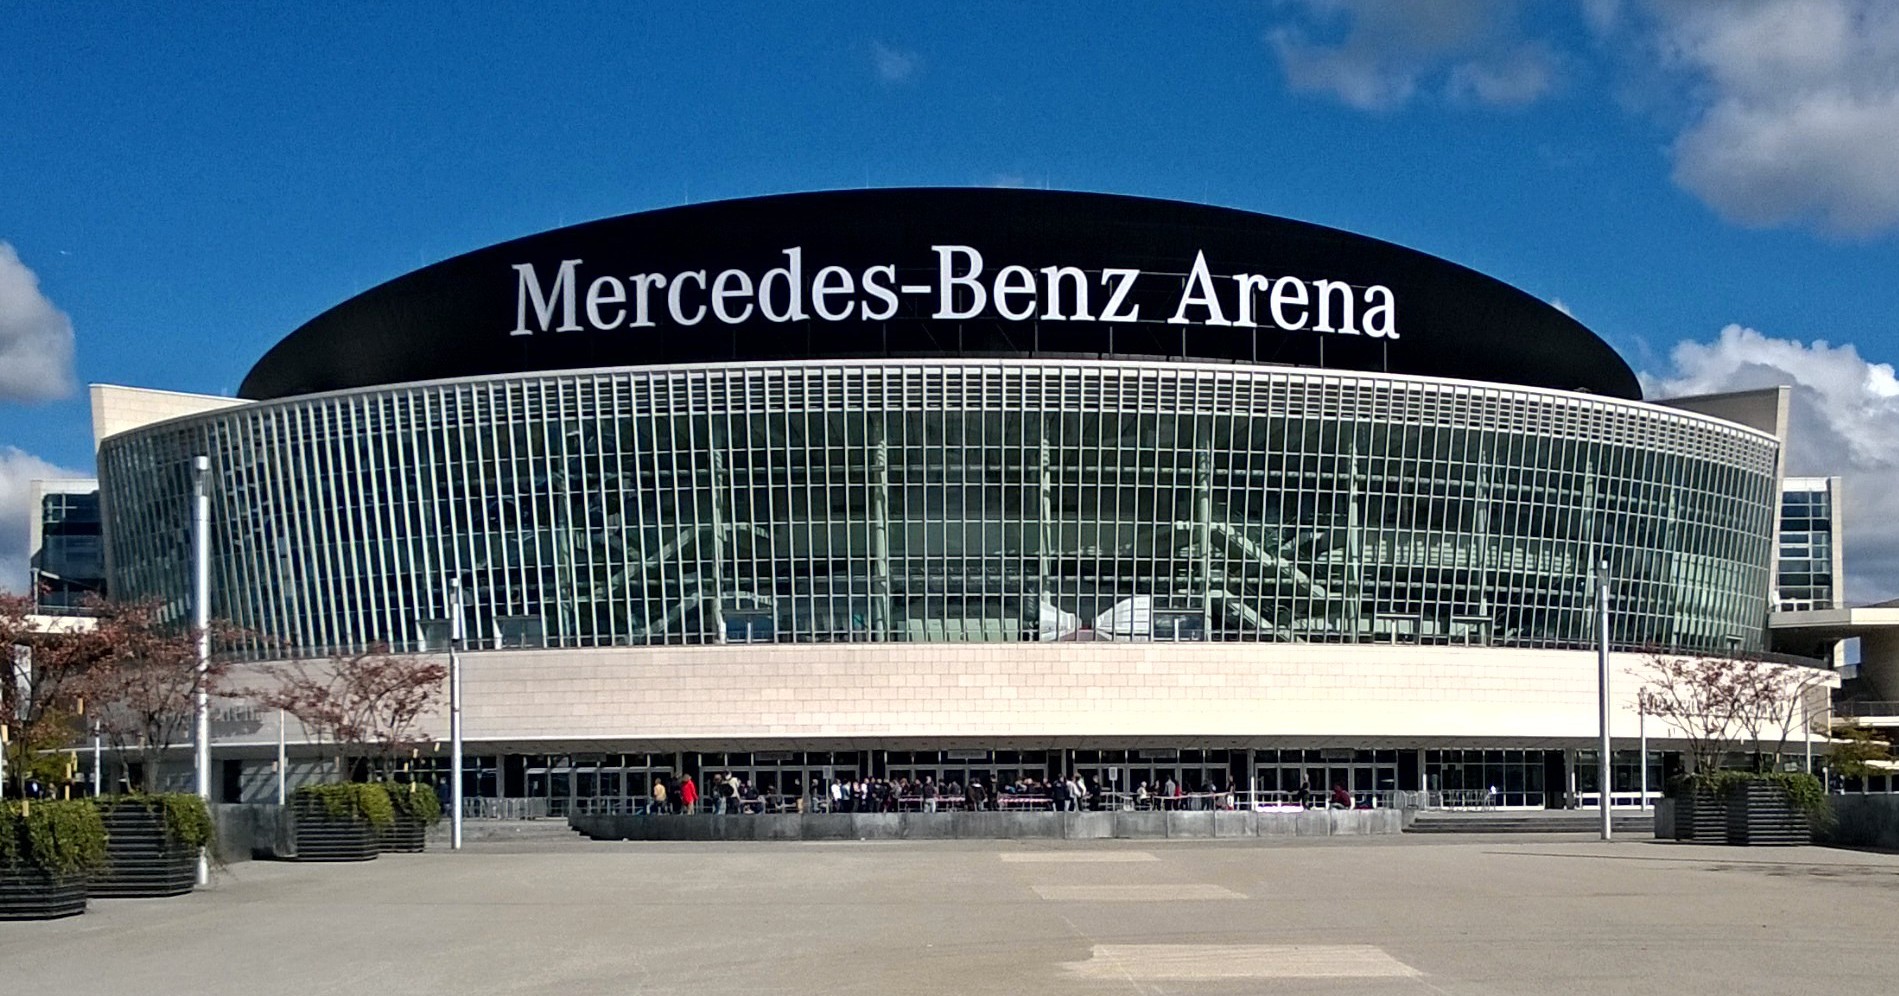 Venue of Arena Berlin